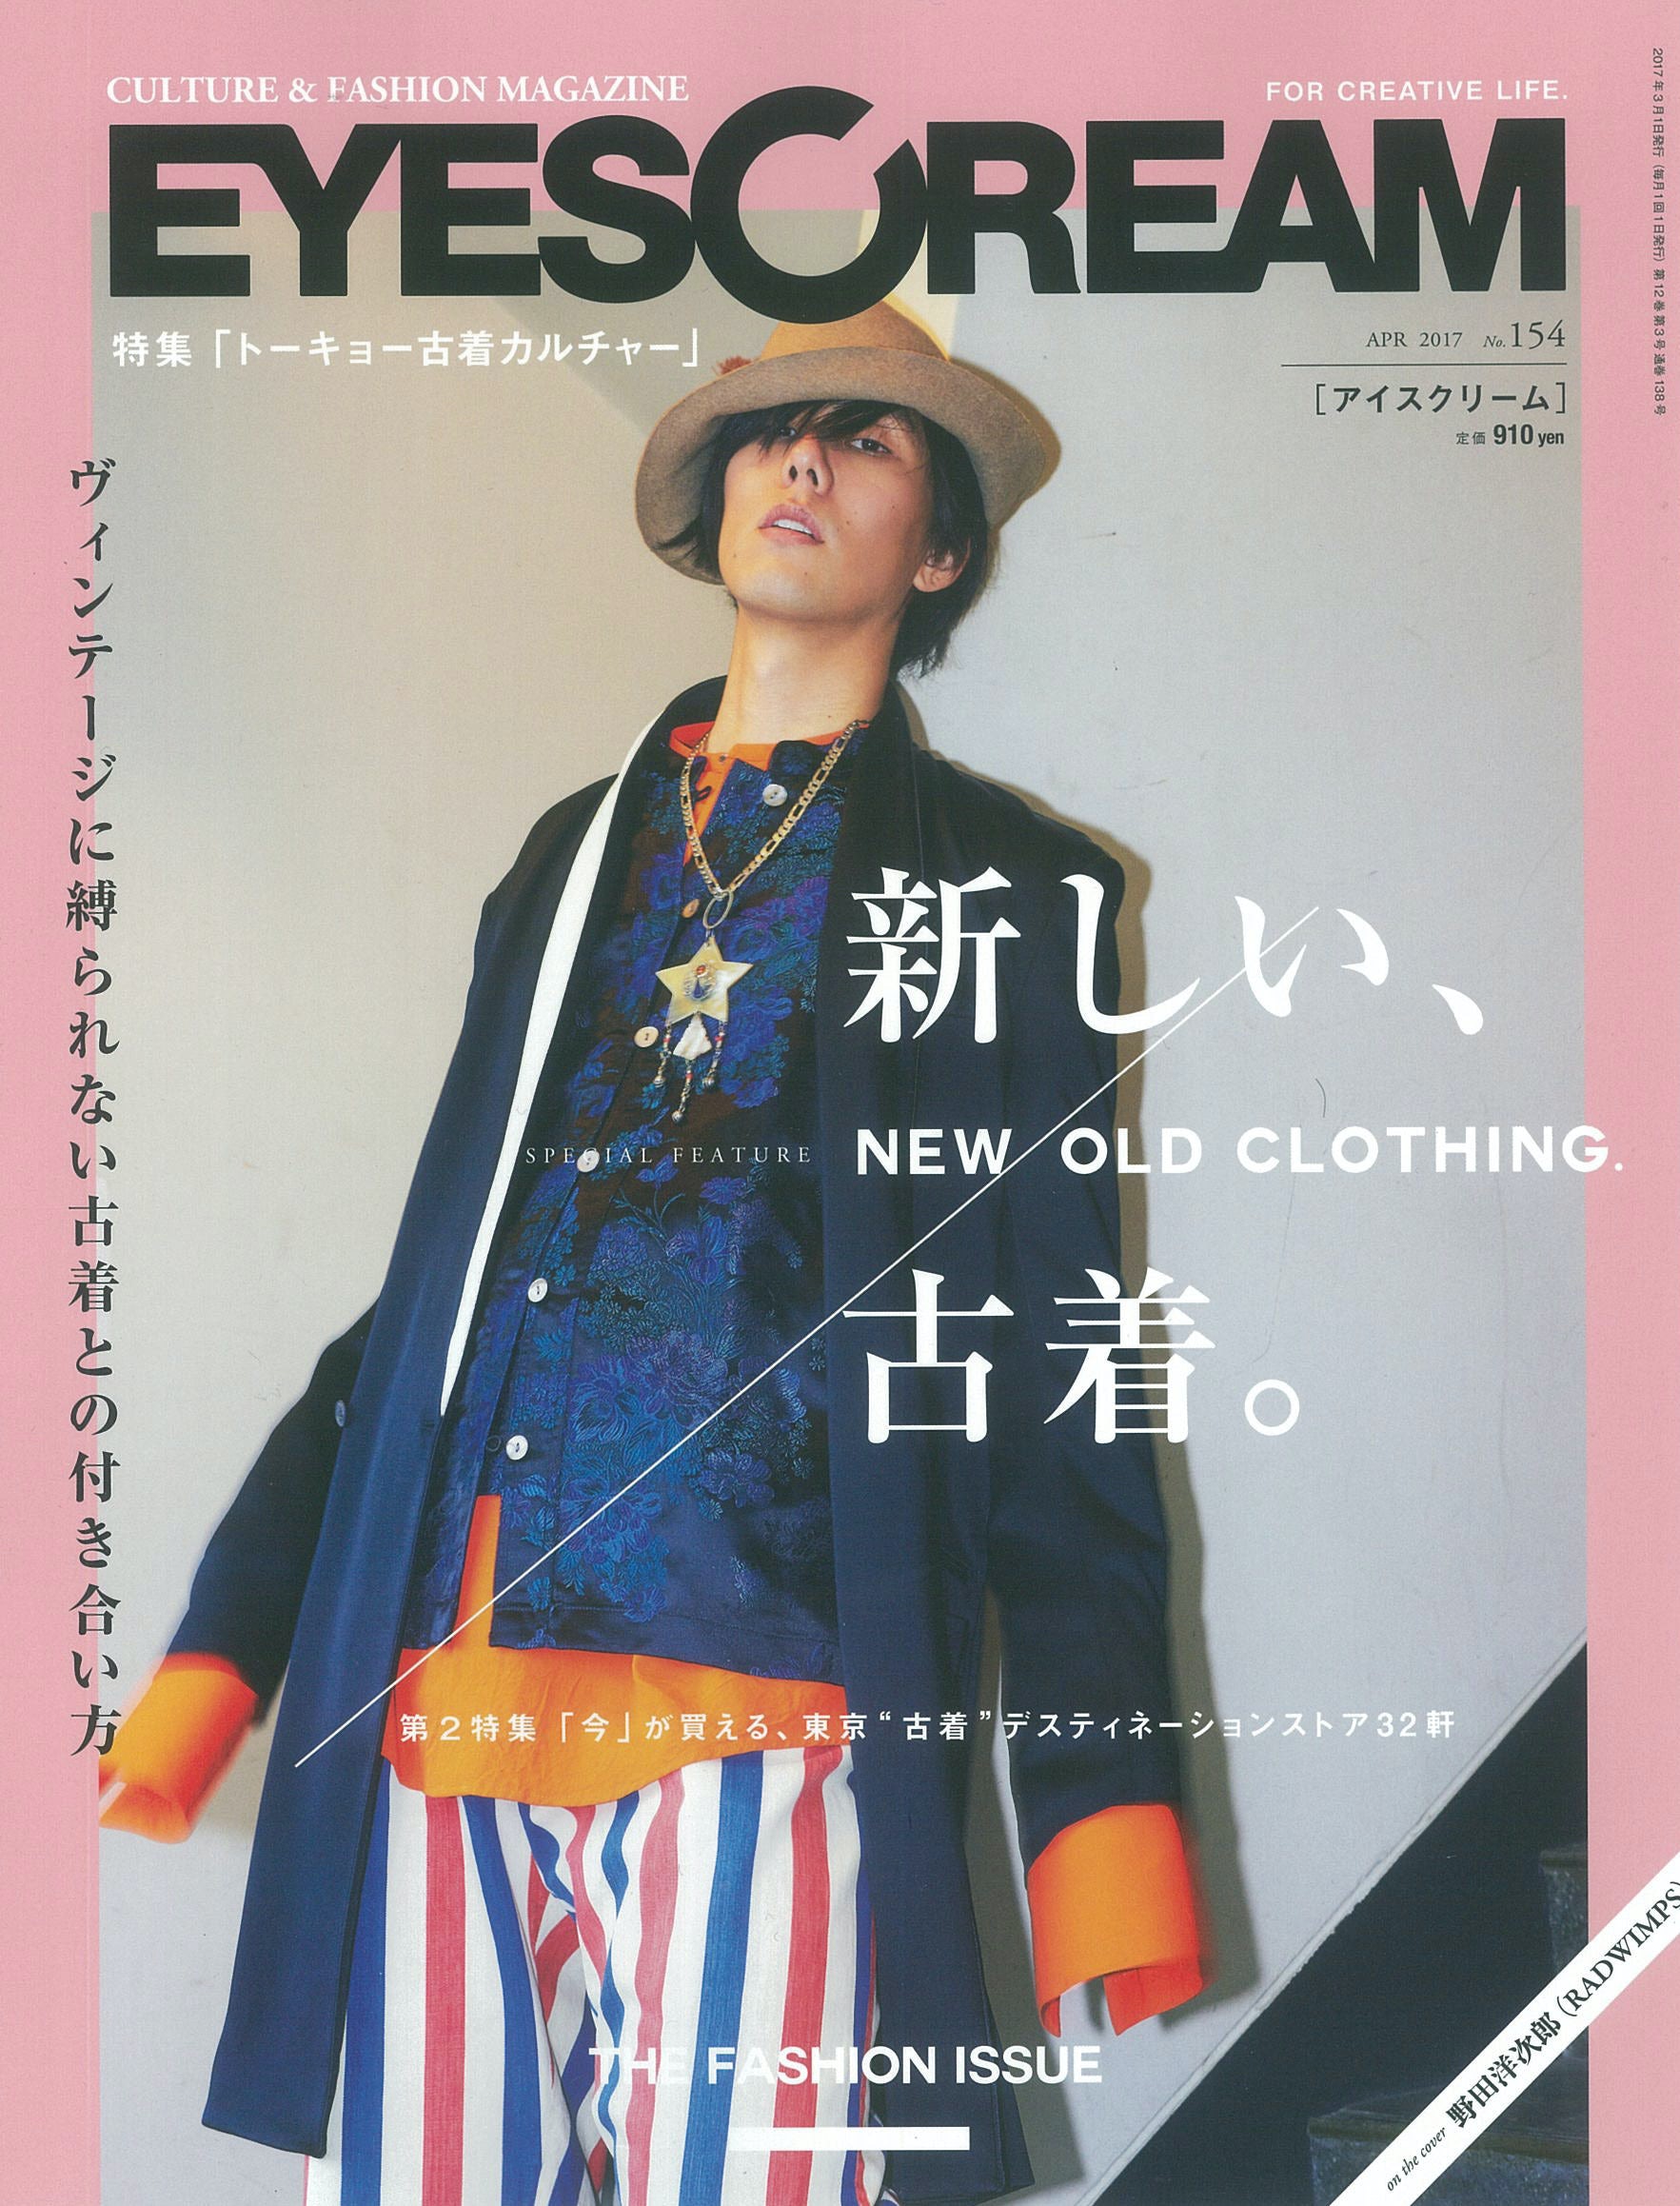 A moment for Japanese designer - Hint Fashion Magazine